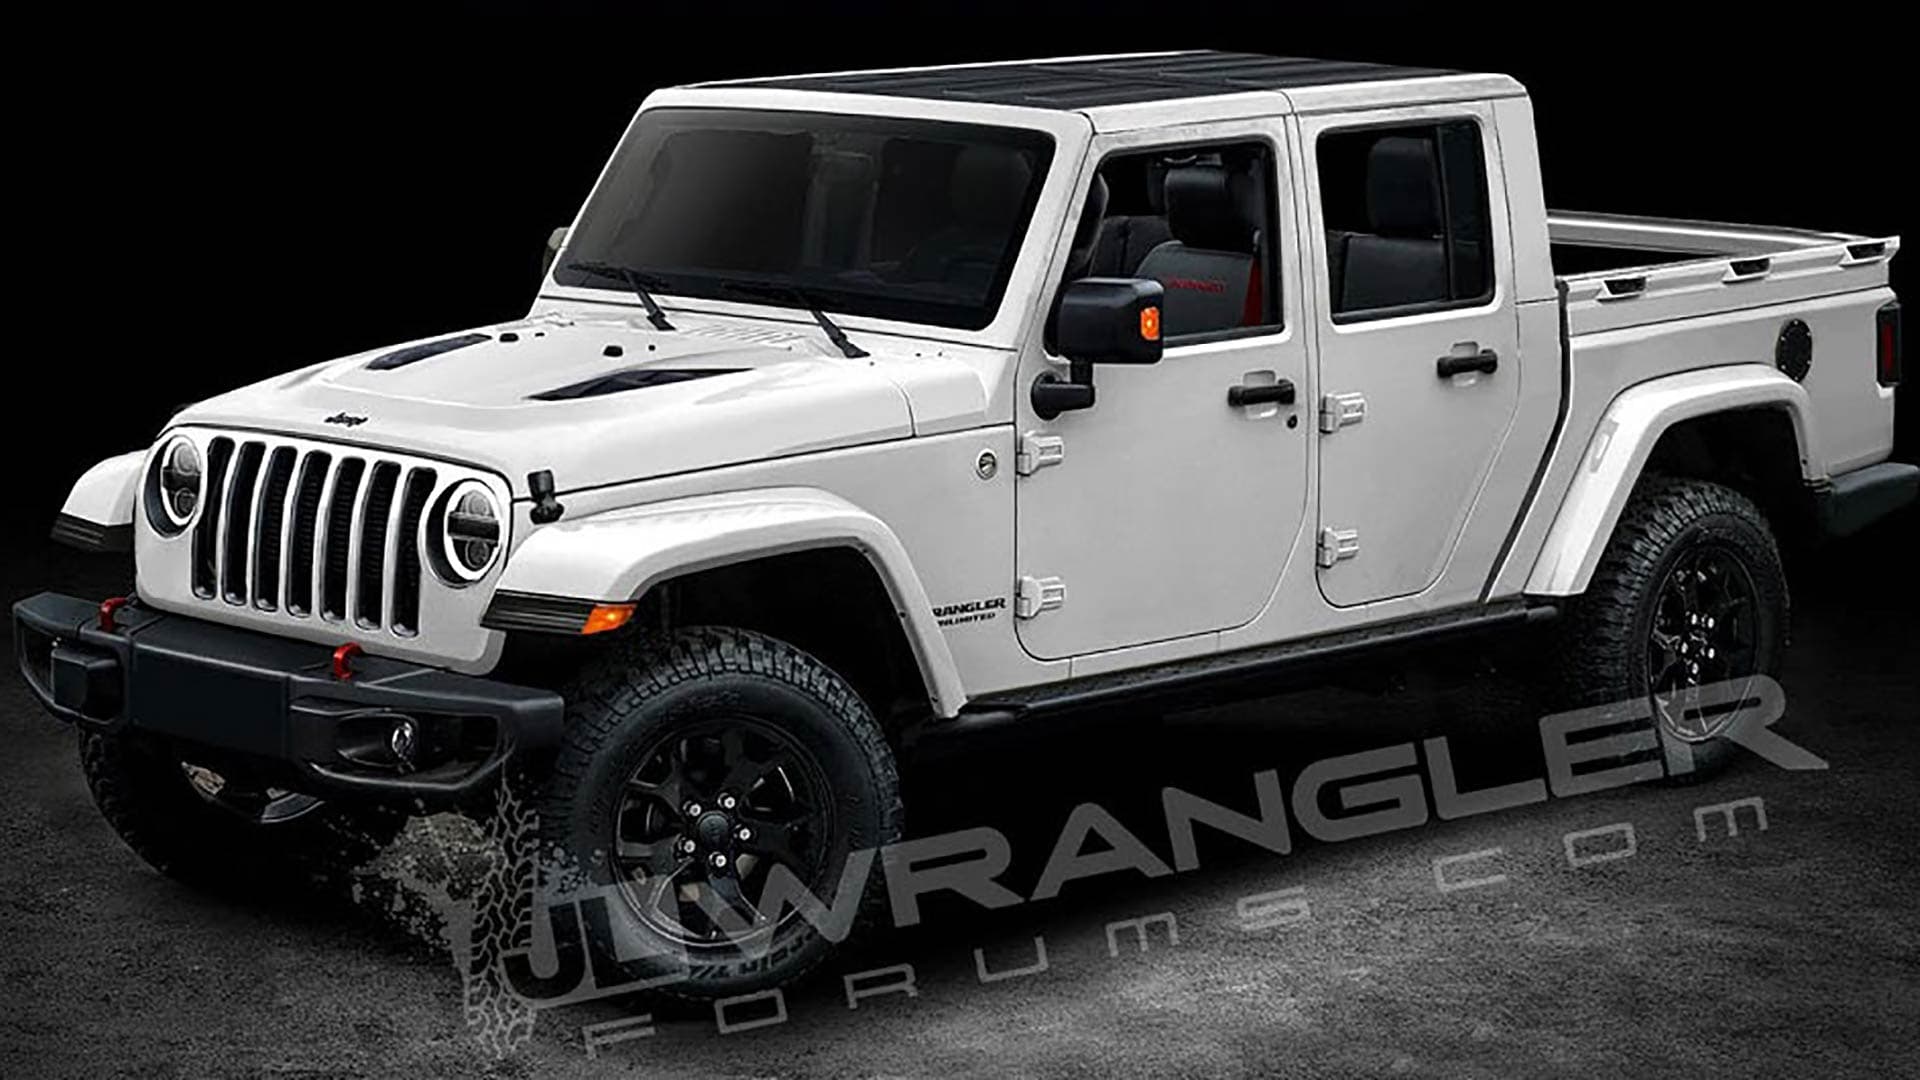 JL Wrangler Forums Releases Renderings of Future Jeep Pickup